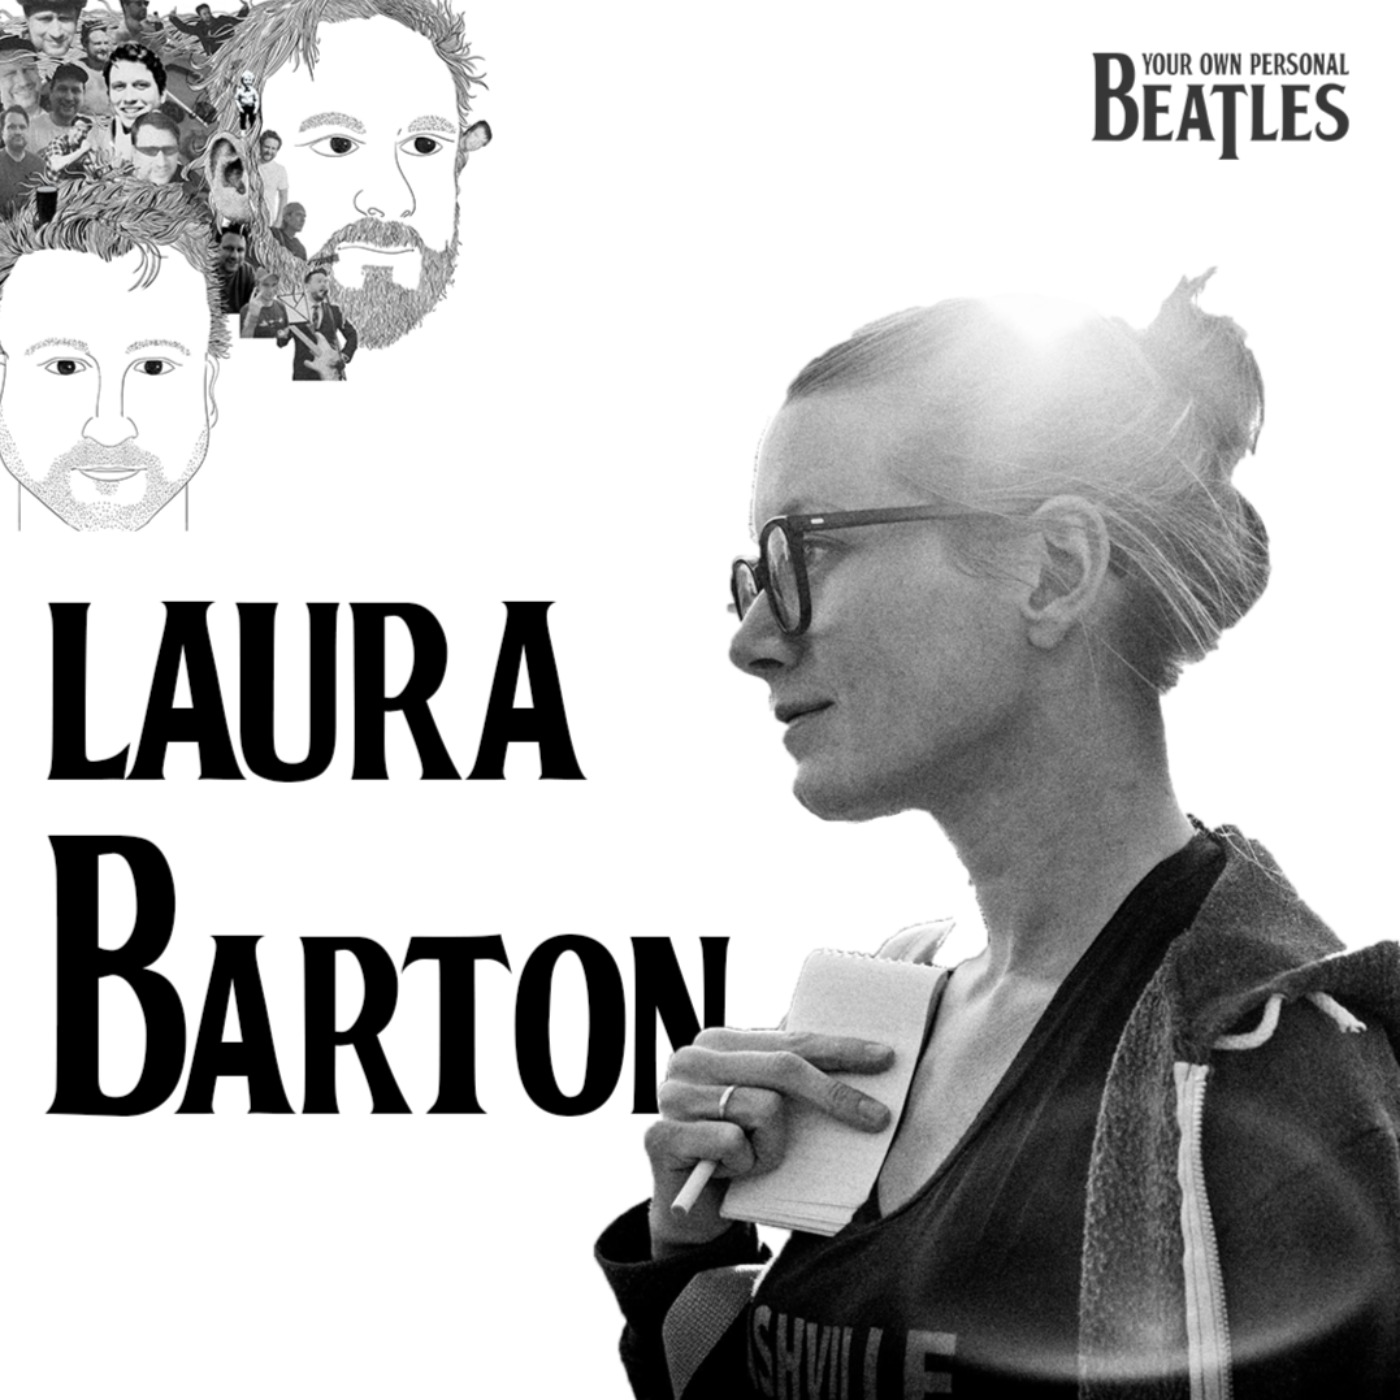 Laura Barton's Personal Beatles